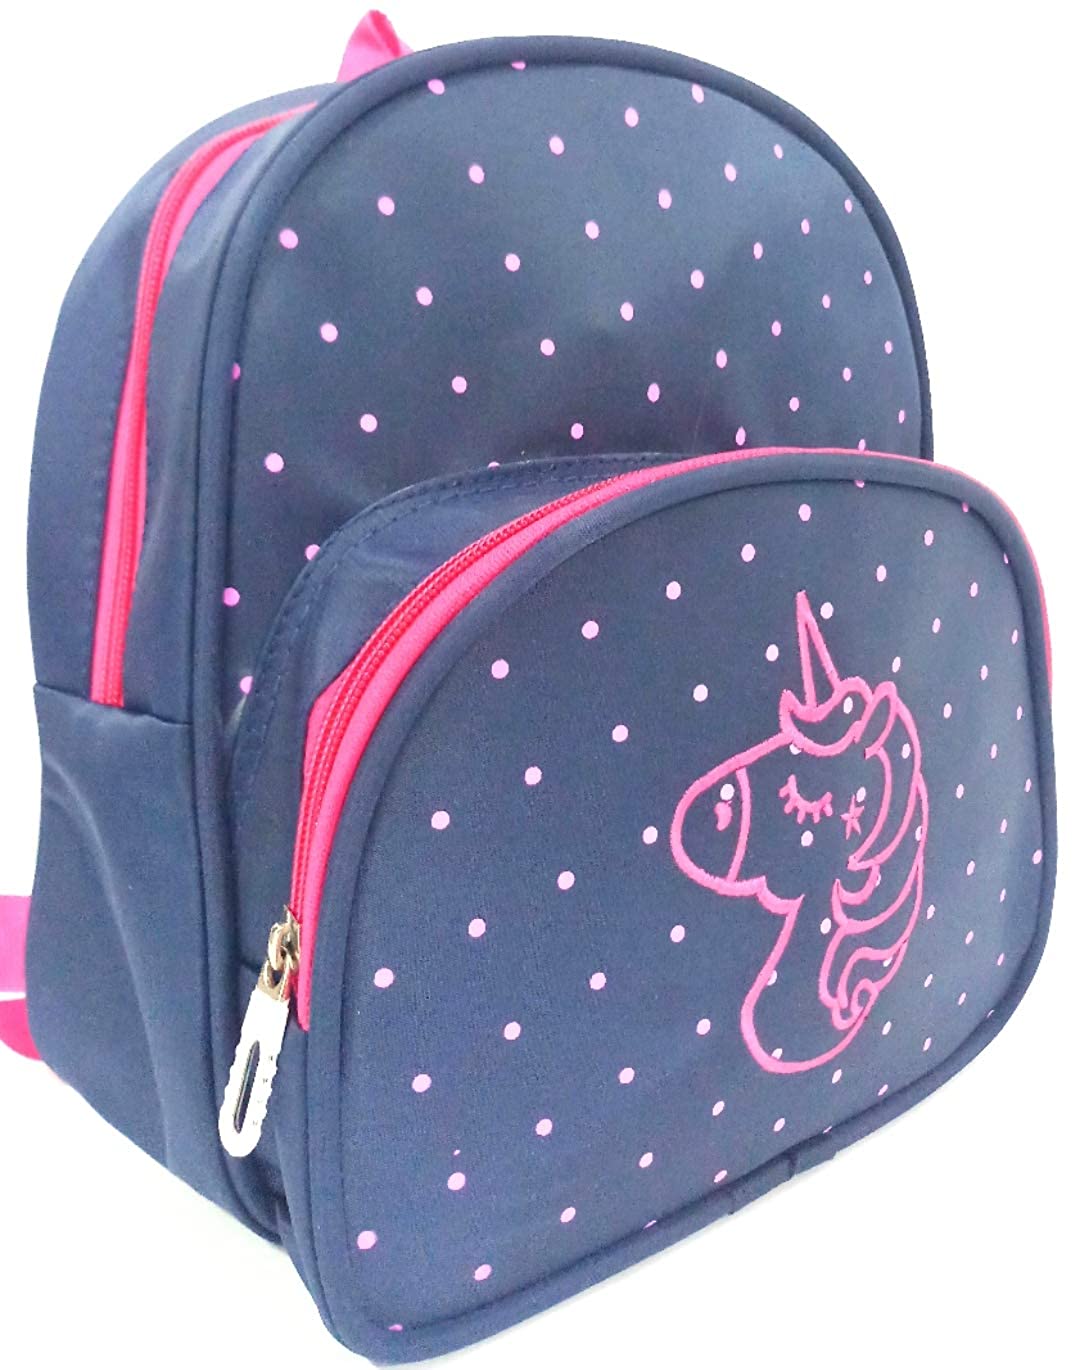 Unicorn purse | Purses, Clothes design, Style